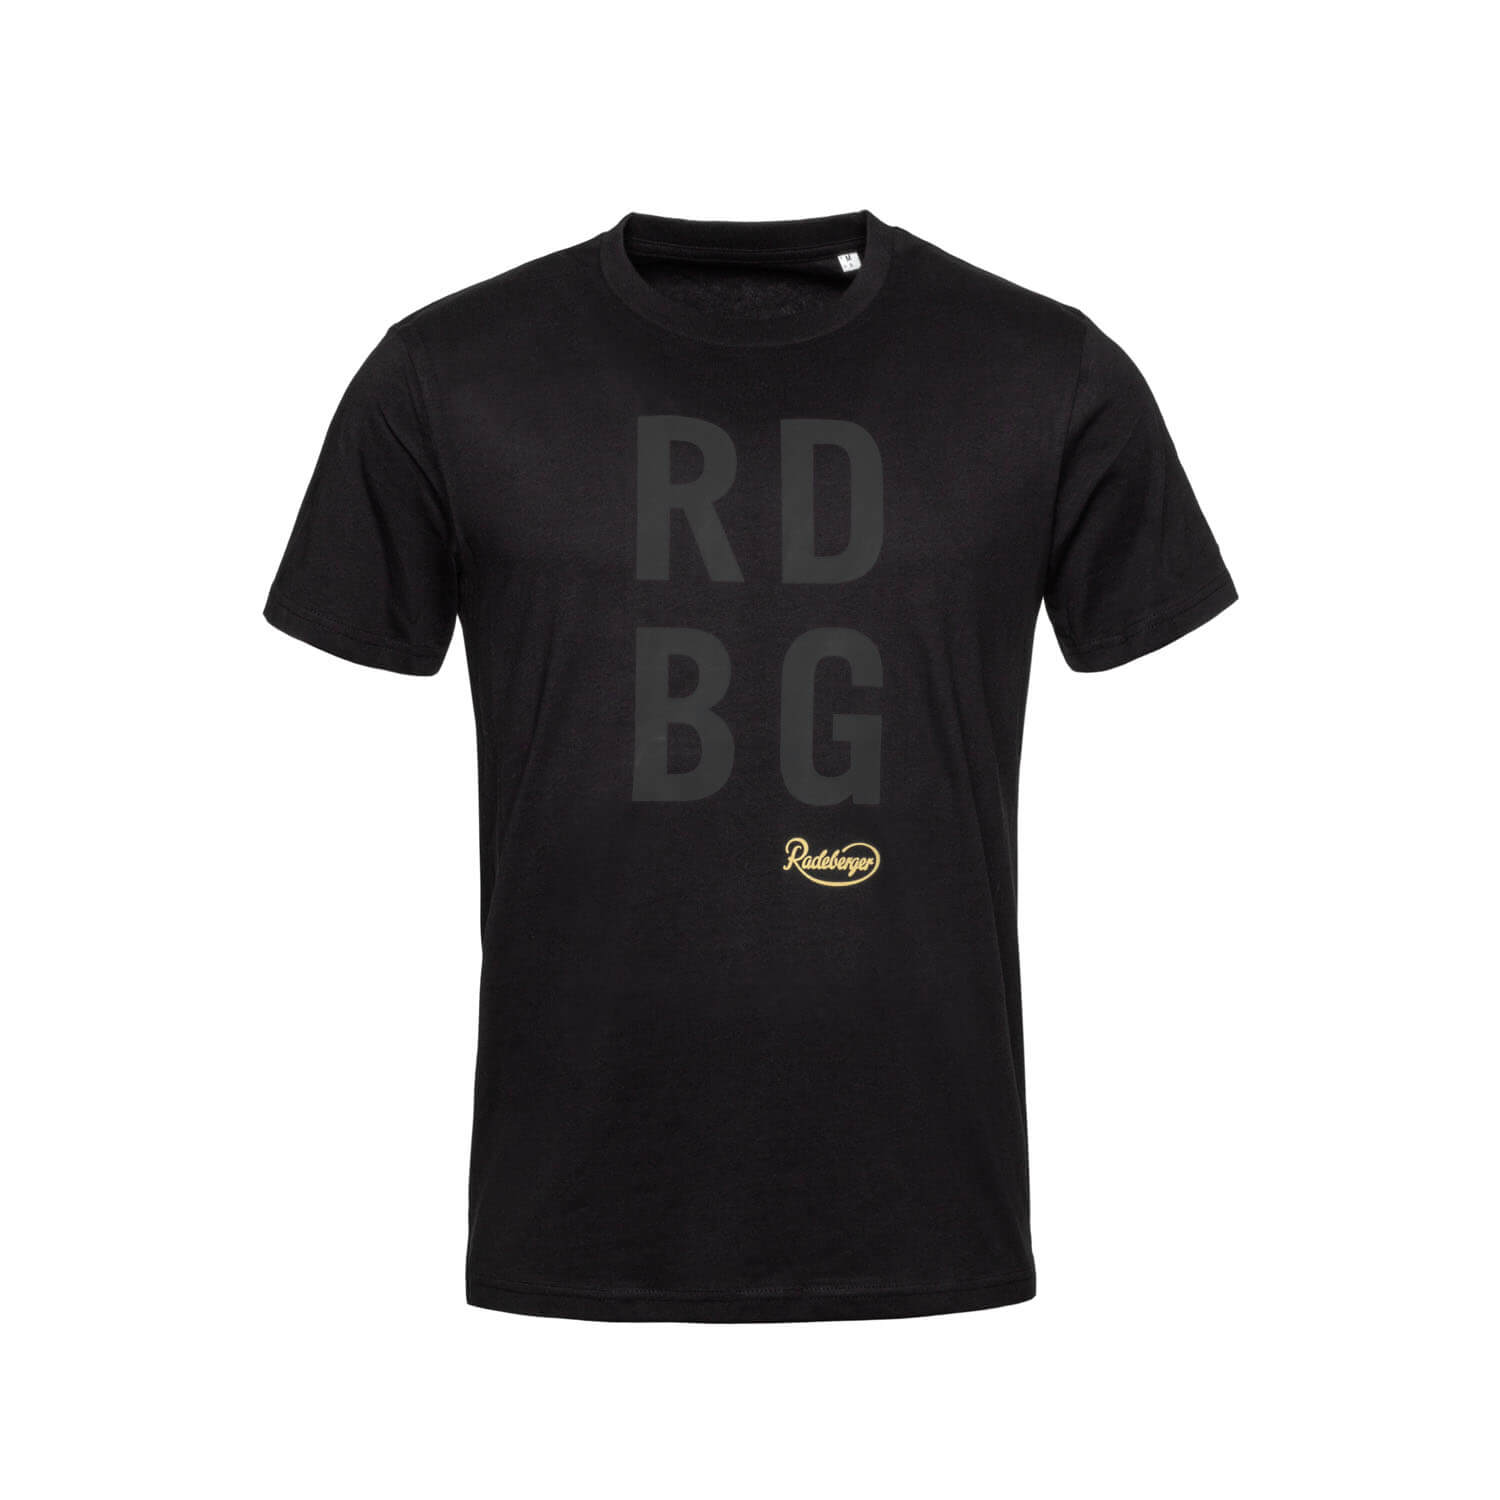 Radeberger T-Shirt "RDBG", Herren